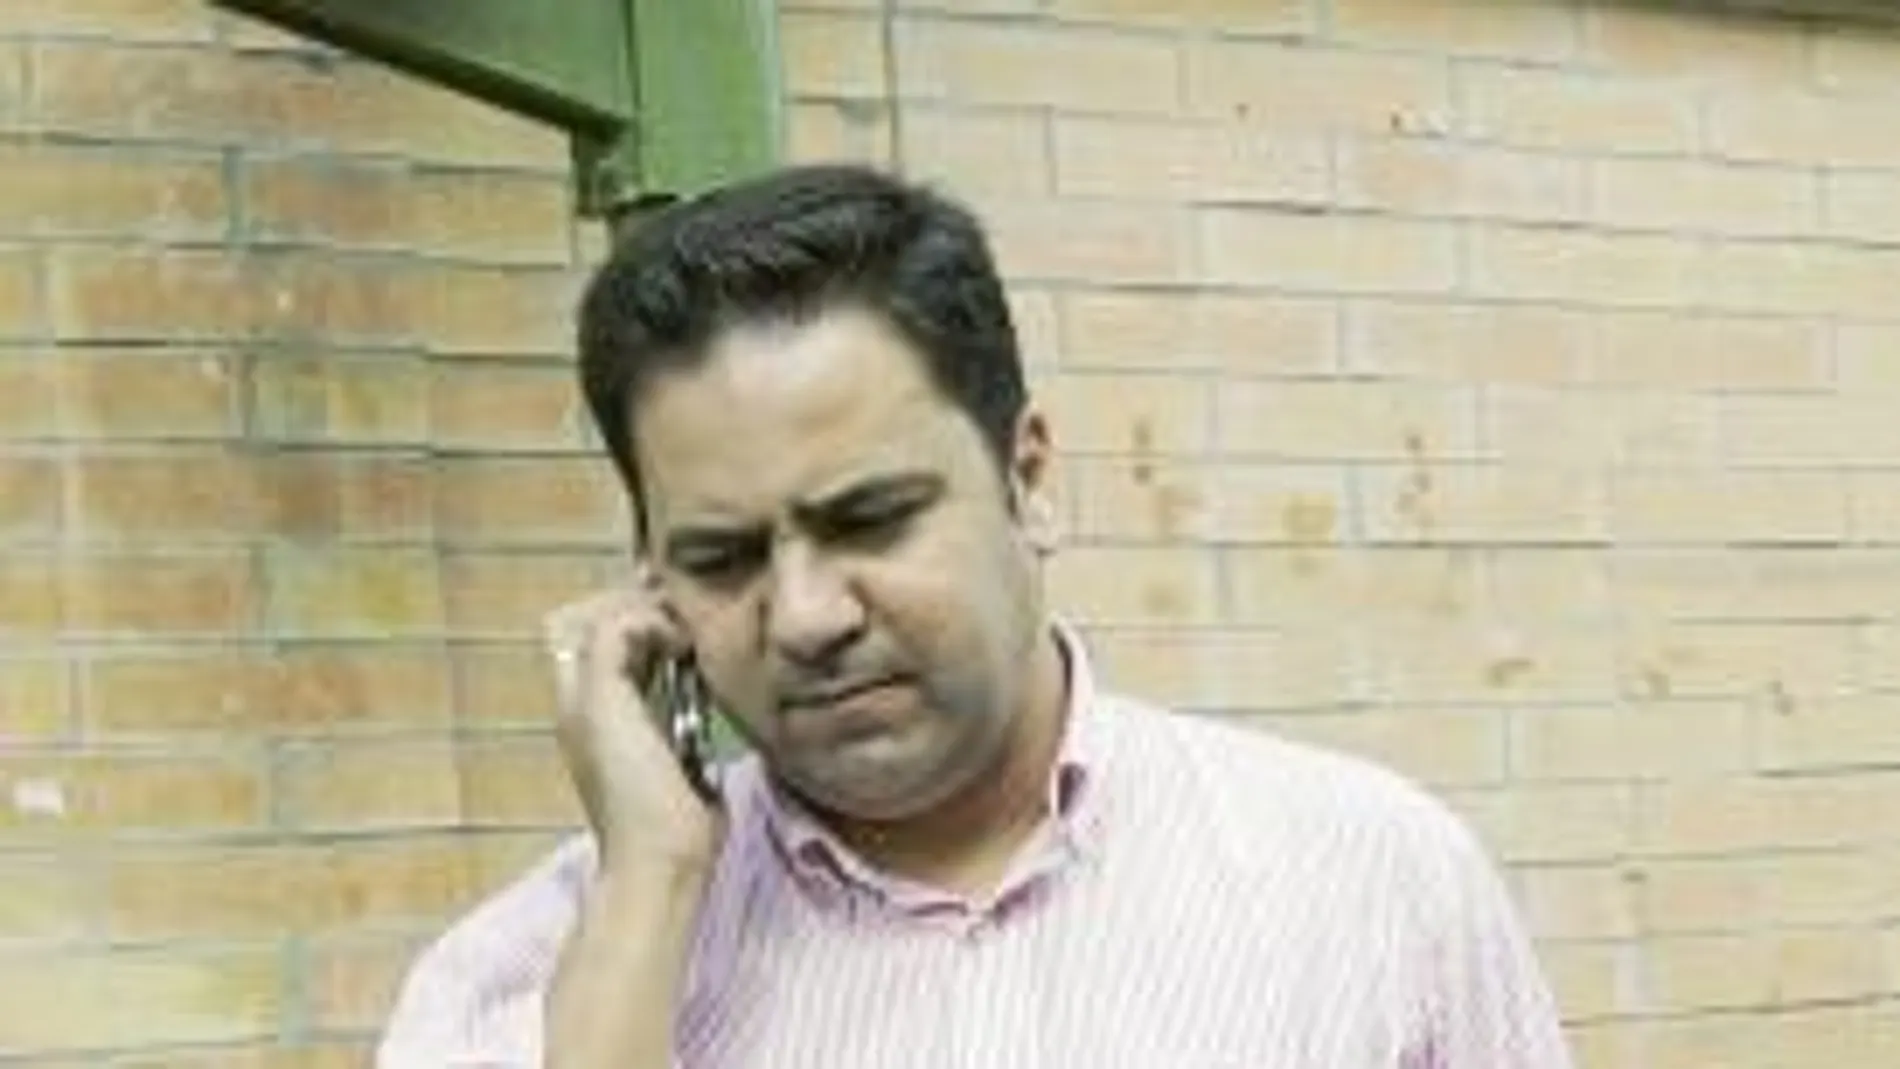 El ex alcalde de Camas Agustín Pavón dialoga por su teléfono móvil